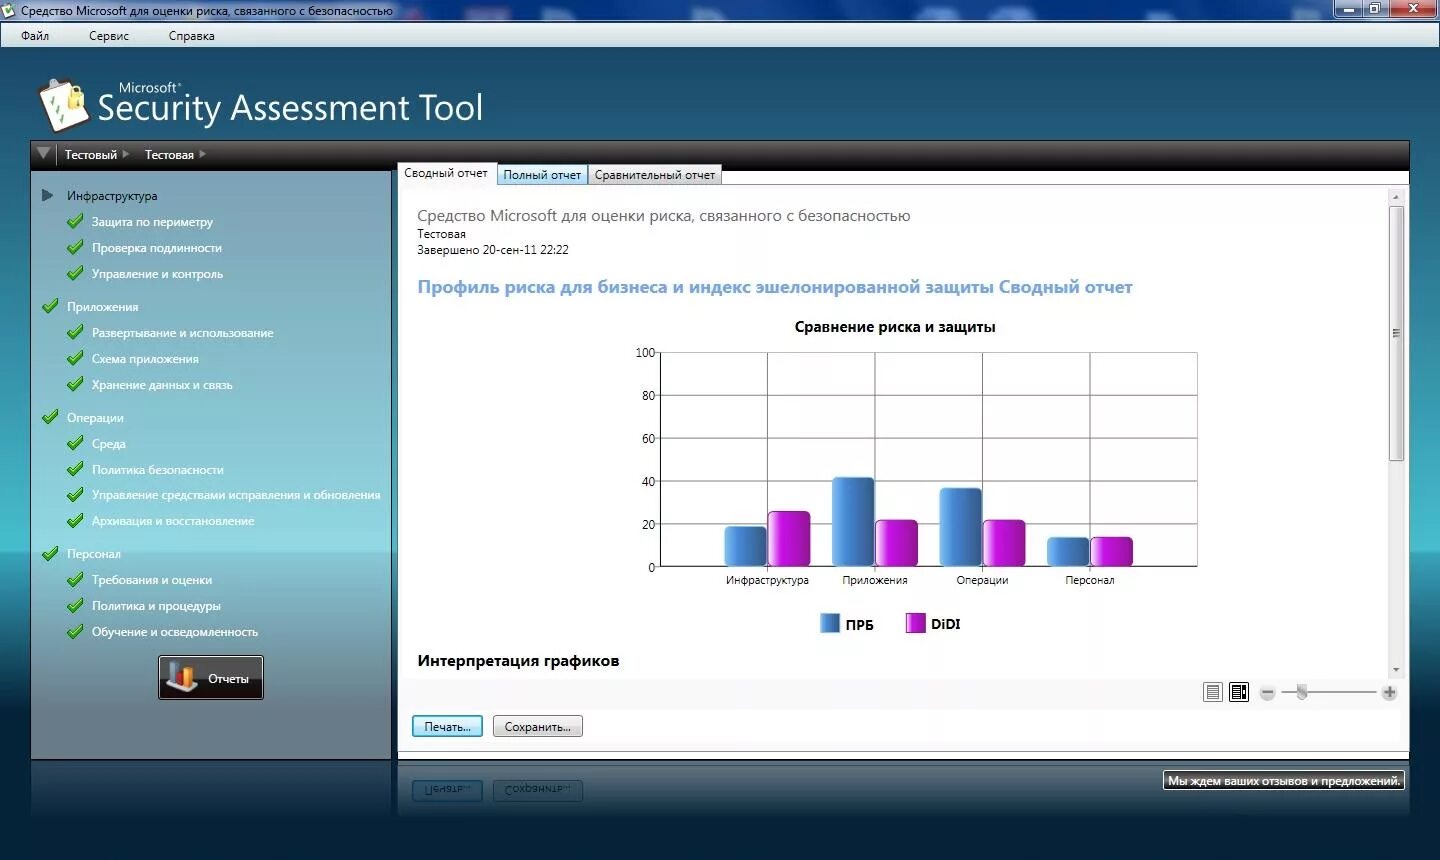 Microsoft Security Assessment Tool. Оценка MSAT. Майкрософт оценка рисков. Методы оценки и анализа рисков. Tools 4.0